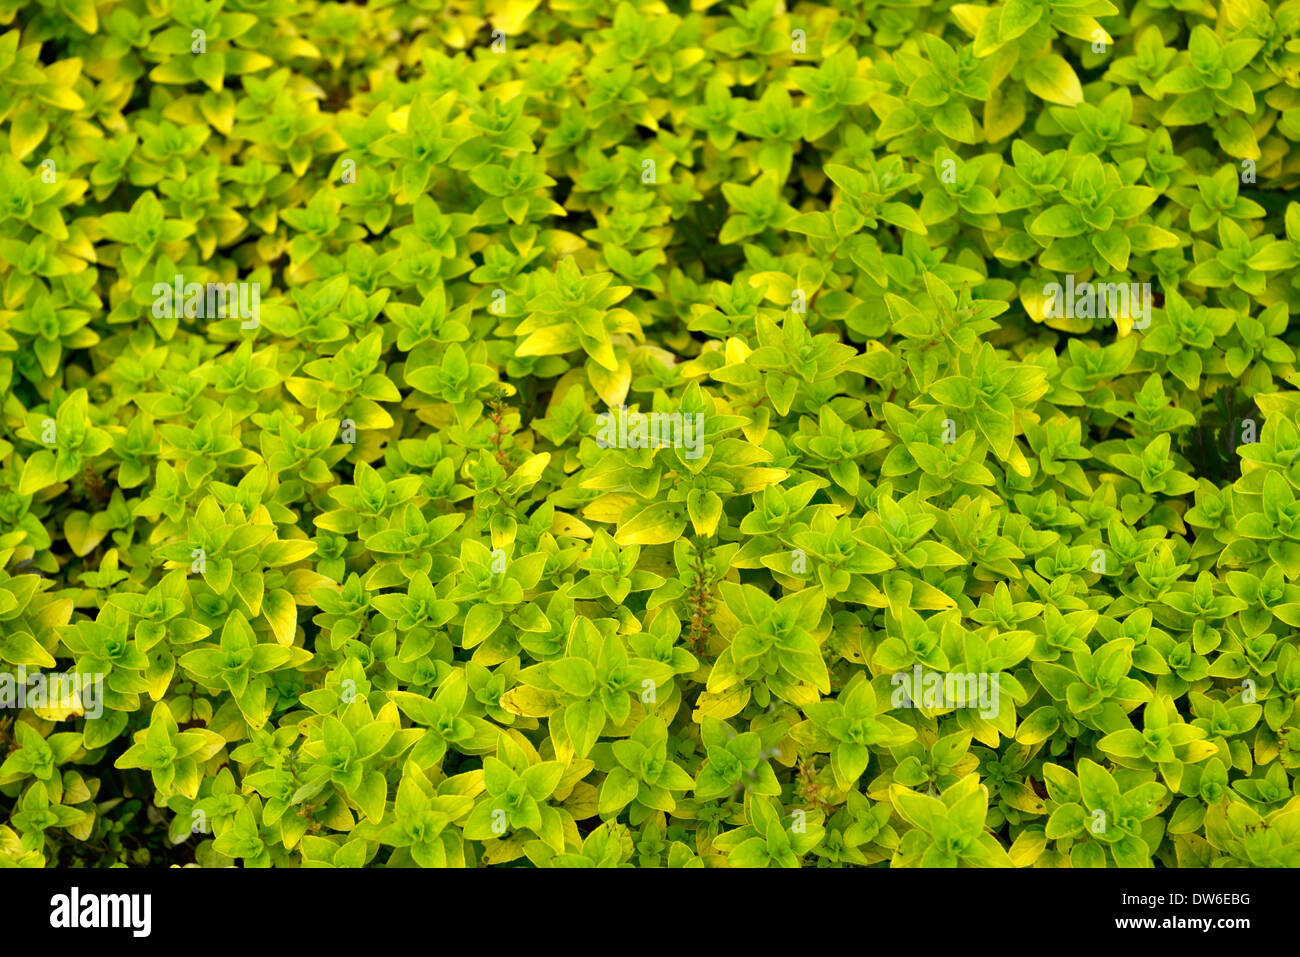 origanum vulgare aureum golden green leaves foliage herbs culinary edible majoram aromatic scented fragrant Stock Photo